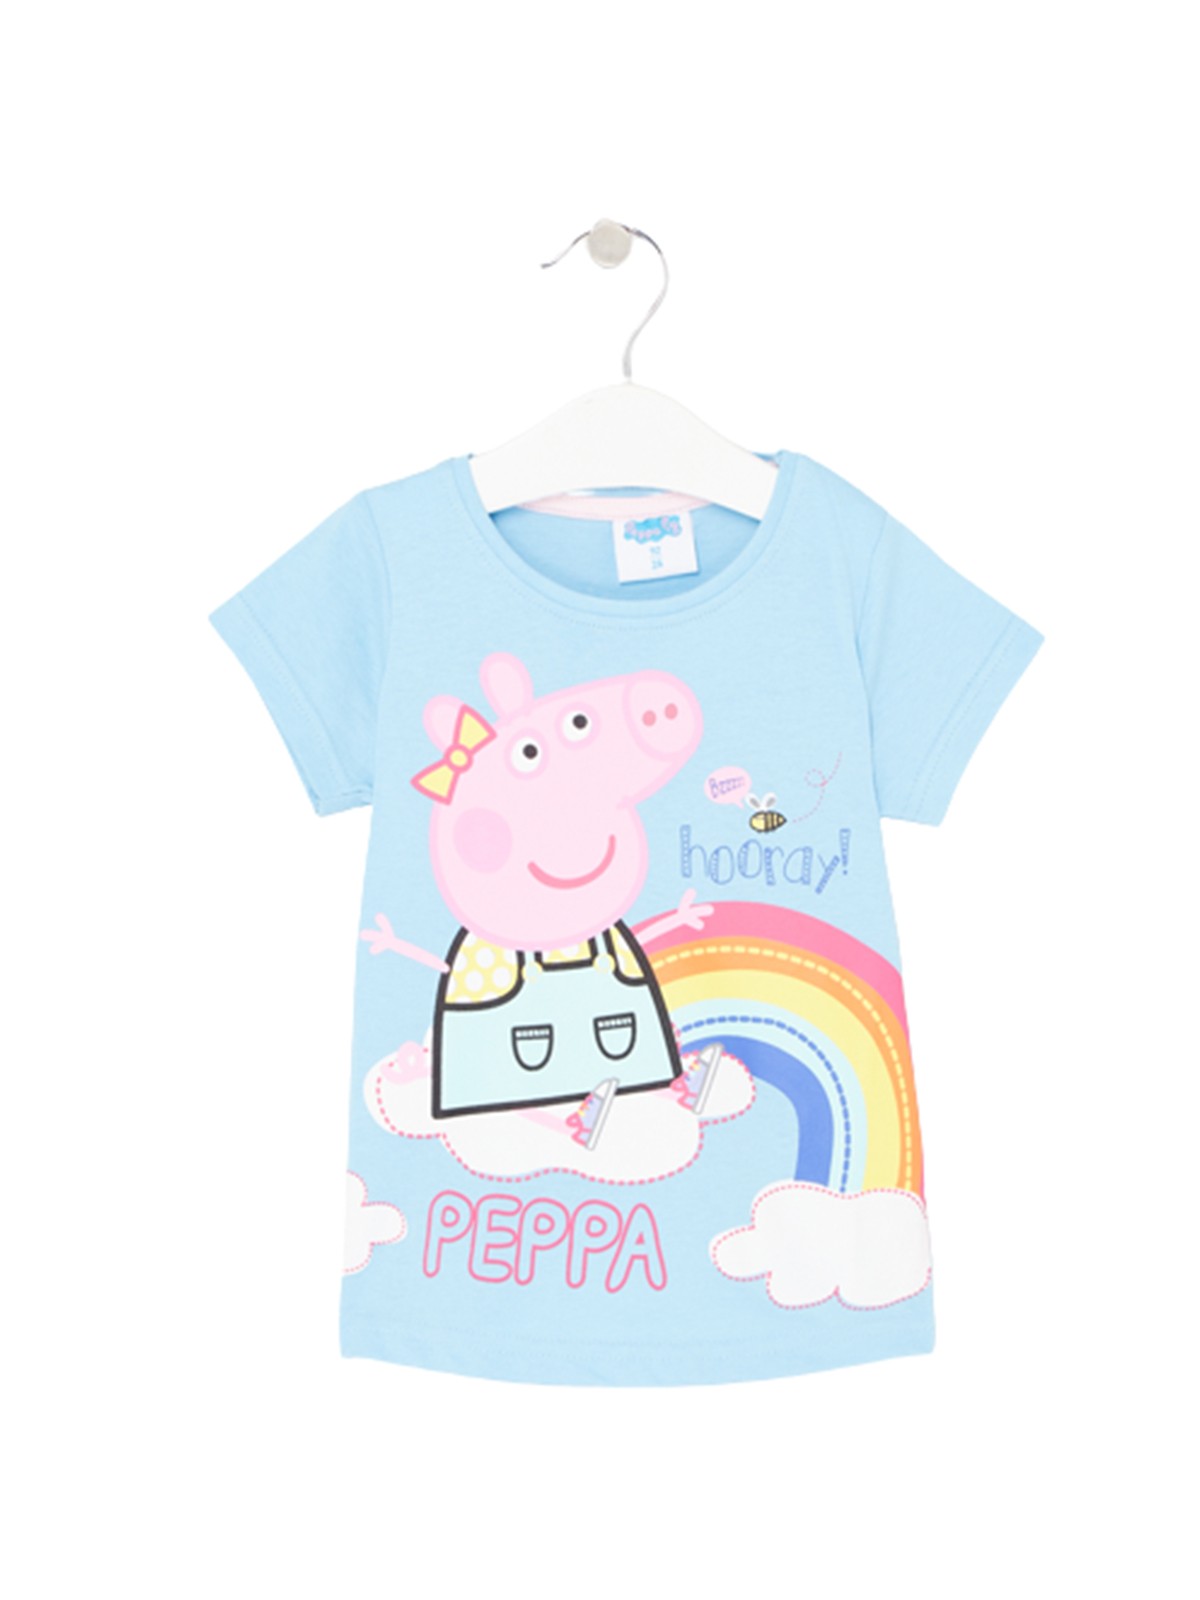 Peppa Pig T-shirt short sleeves